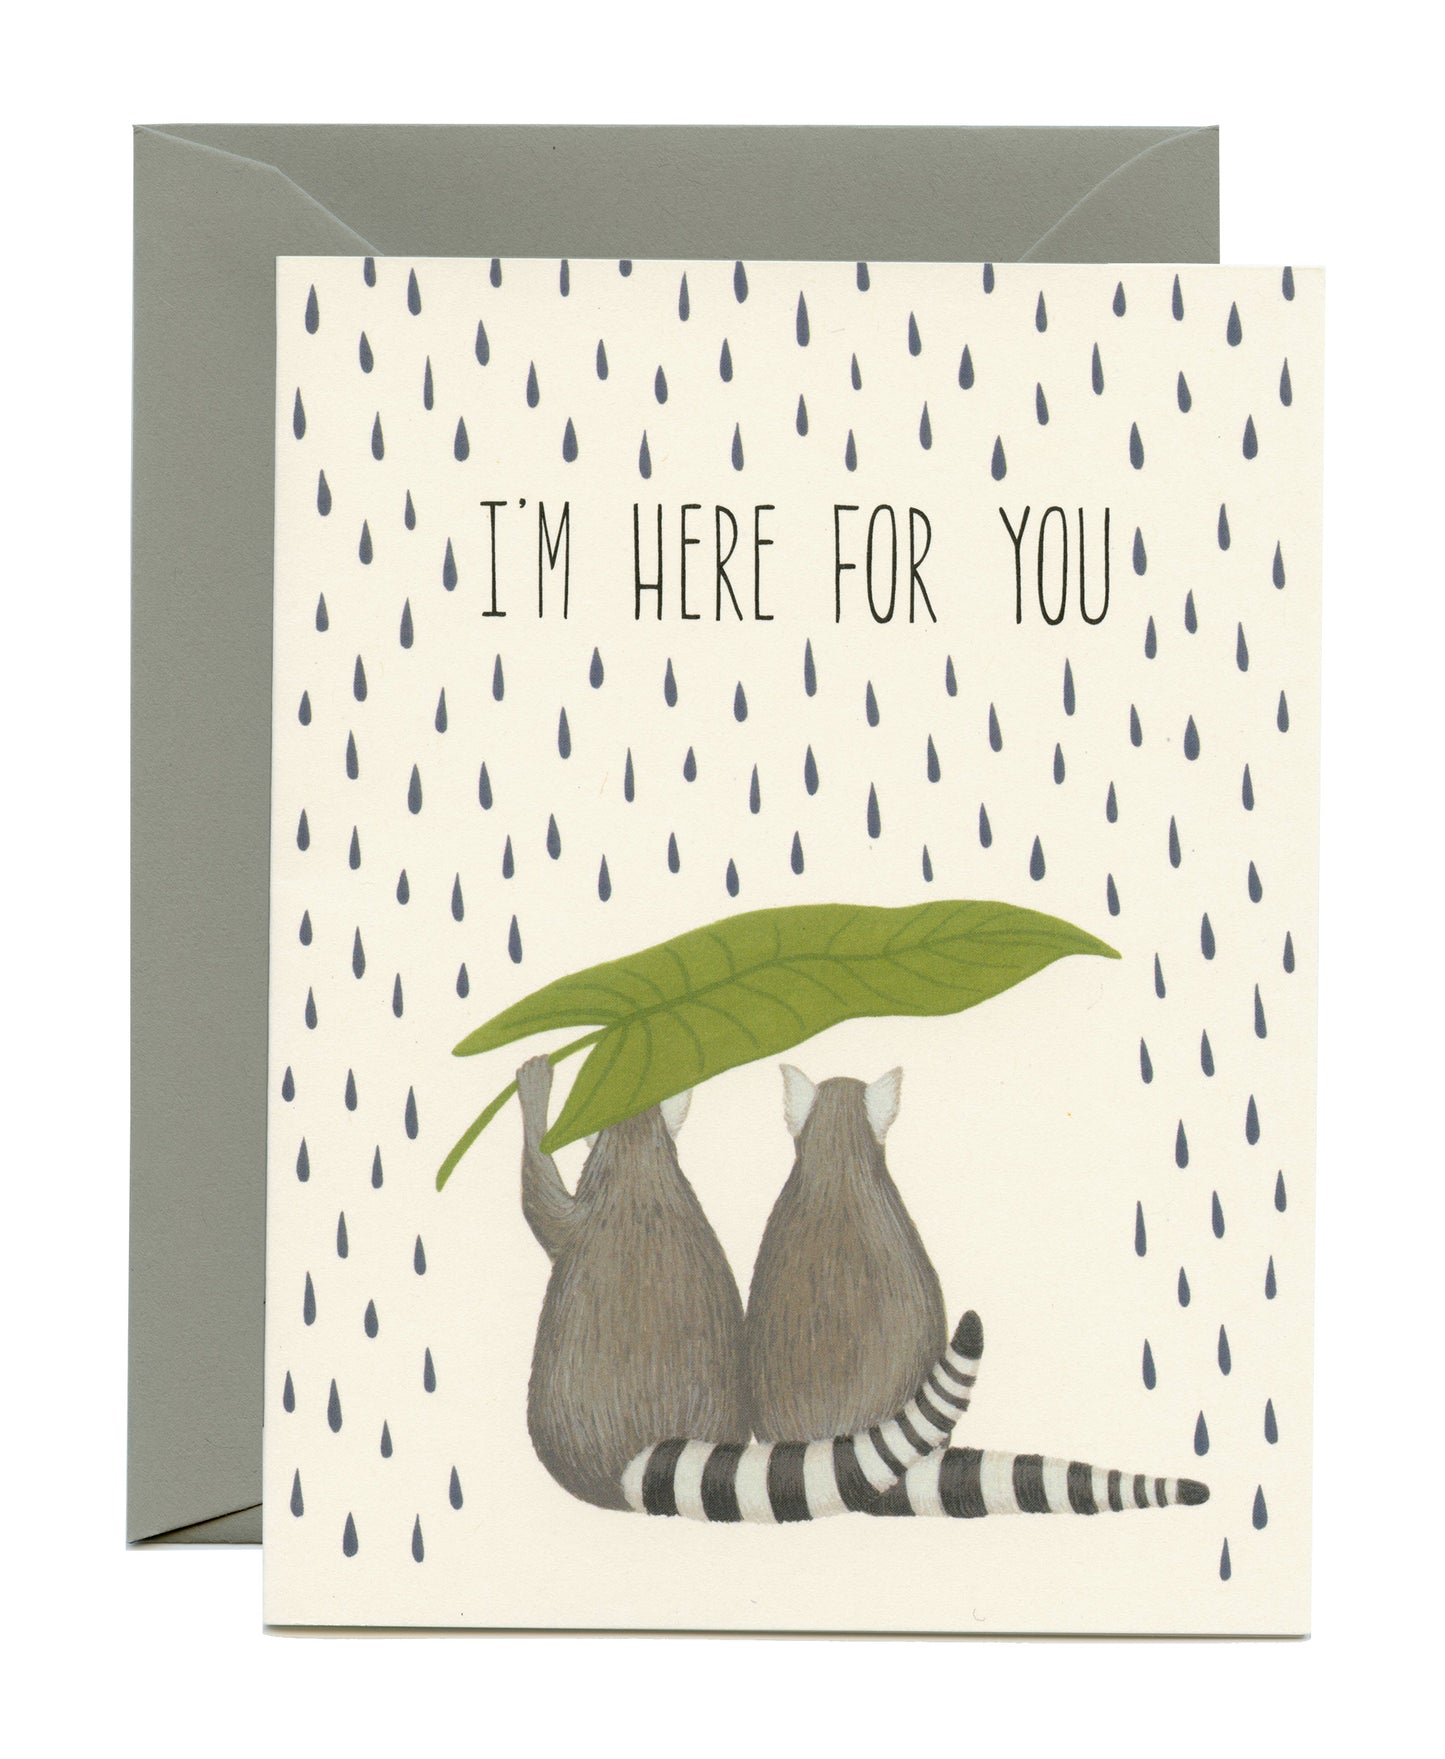 LEMURS IN THE RAIN - SYMPATHY GREETING CARD